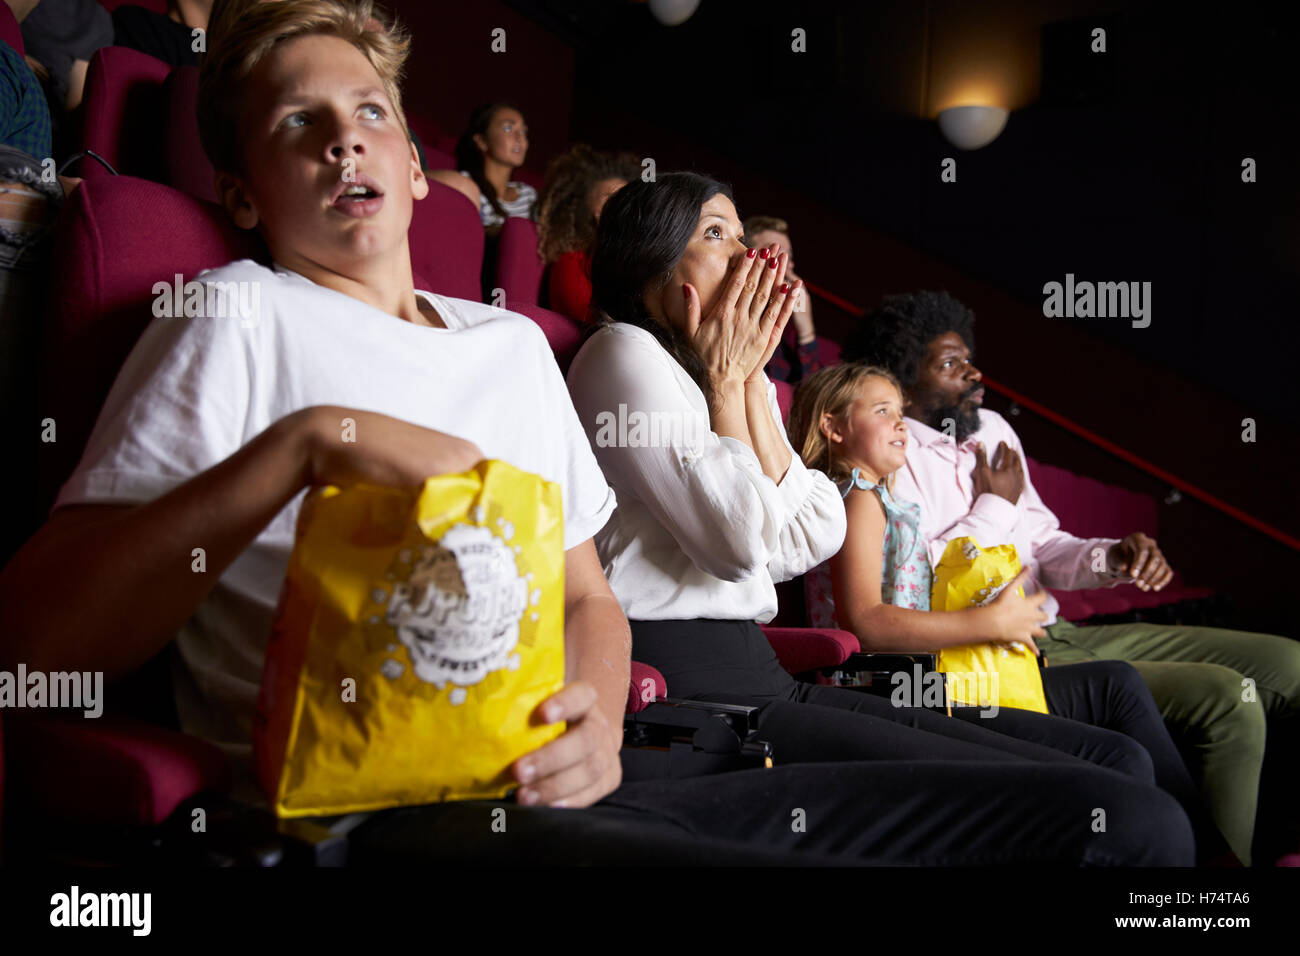 Audience In Cinema Watching Horror Film Stock Photo